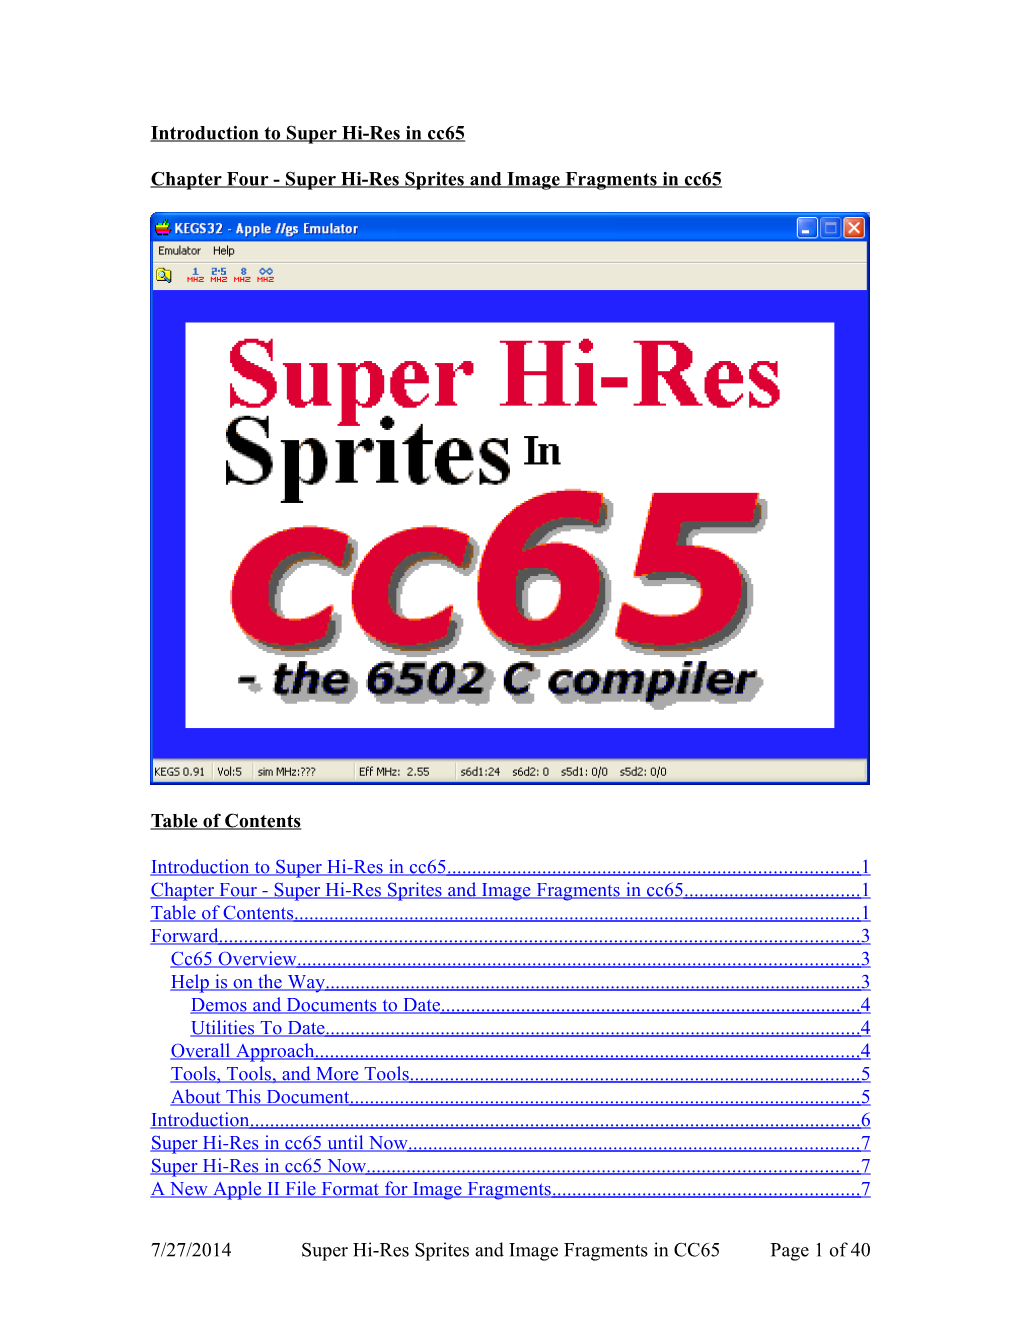 Apple II Super Hi-Res Sprites and Image Fragments in CC65